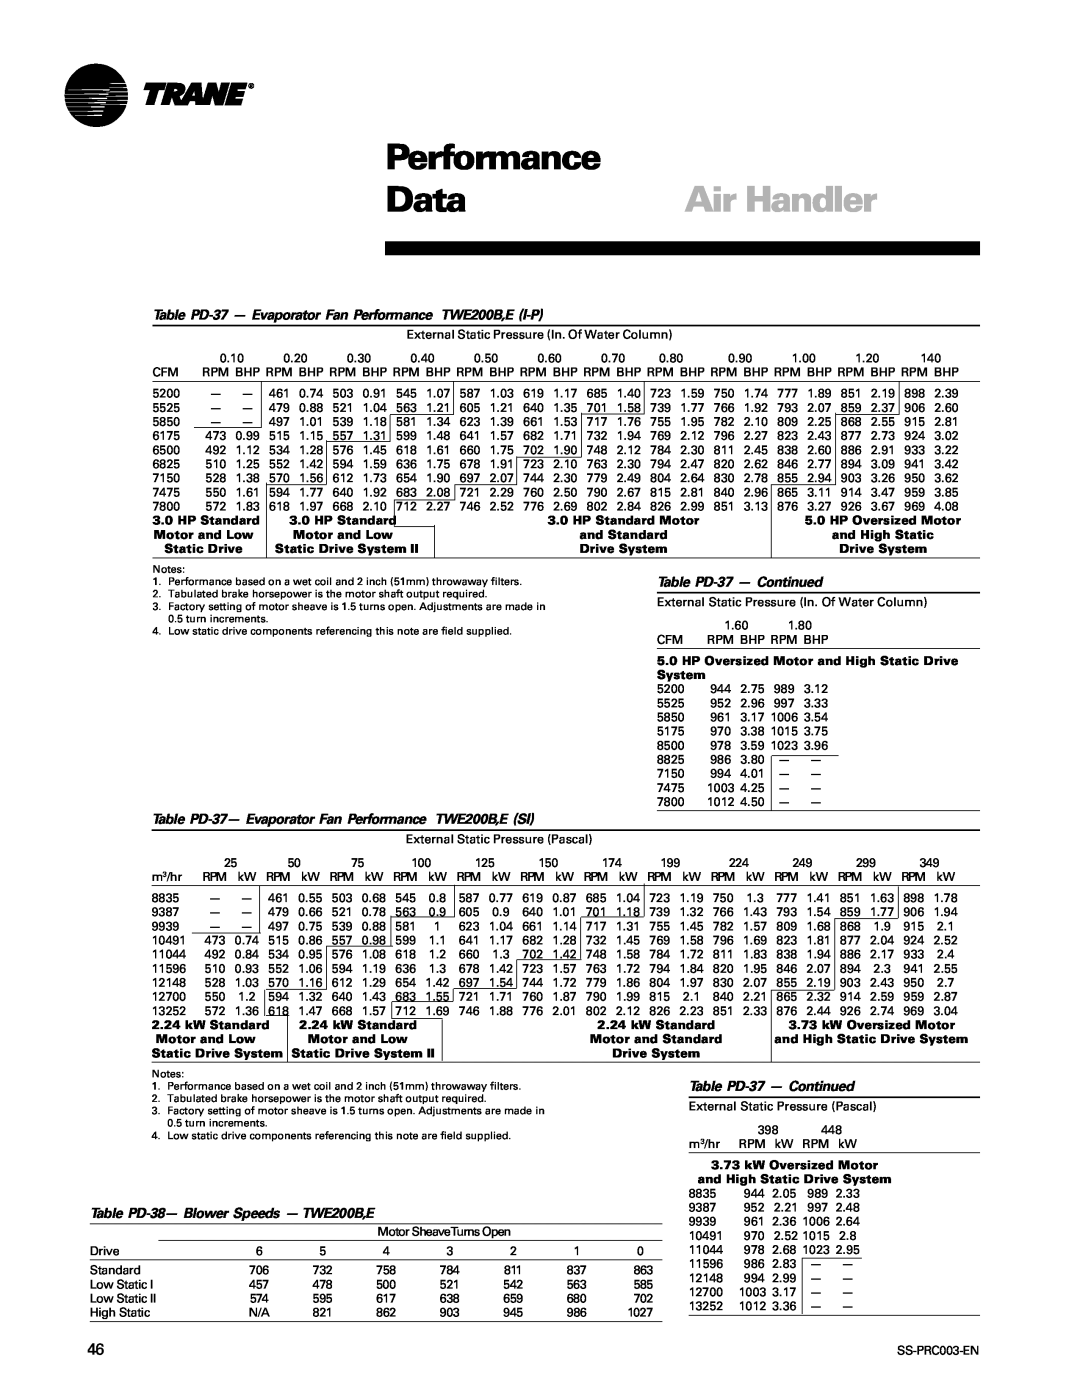 Trane SS-PRC003-EN manual Performance, Data, Air Handler, Table PD-37- Continued 